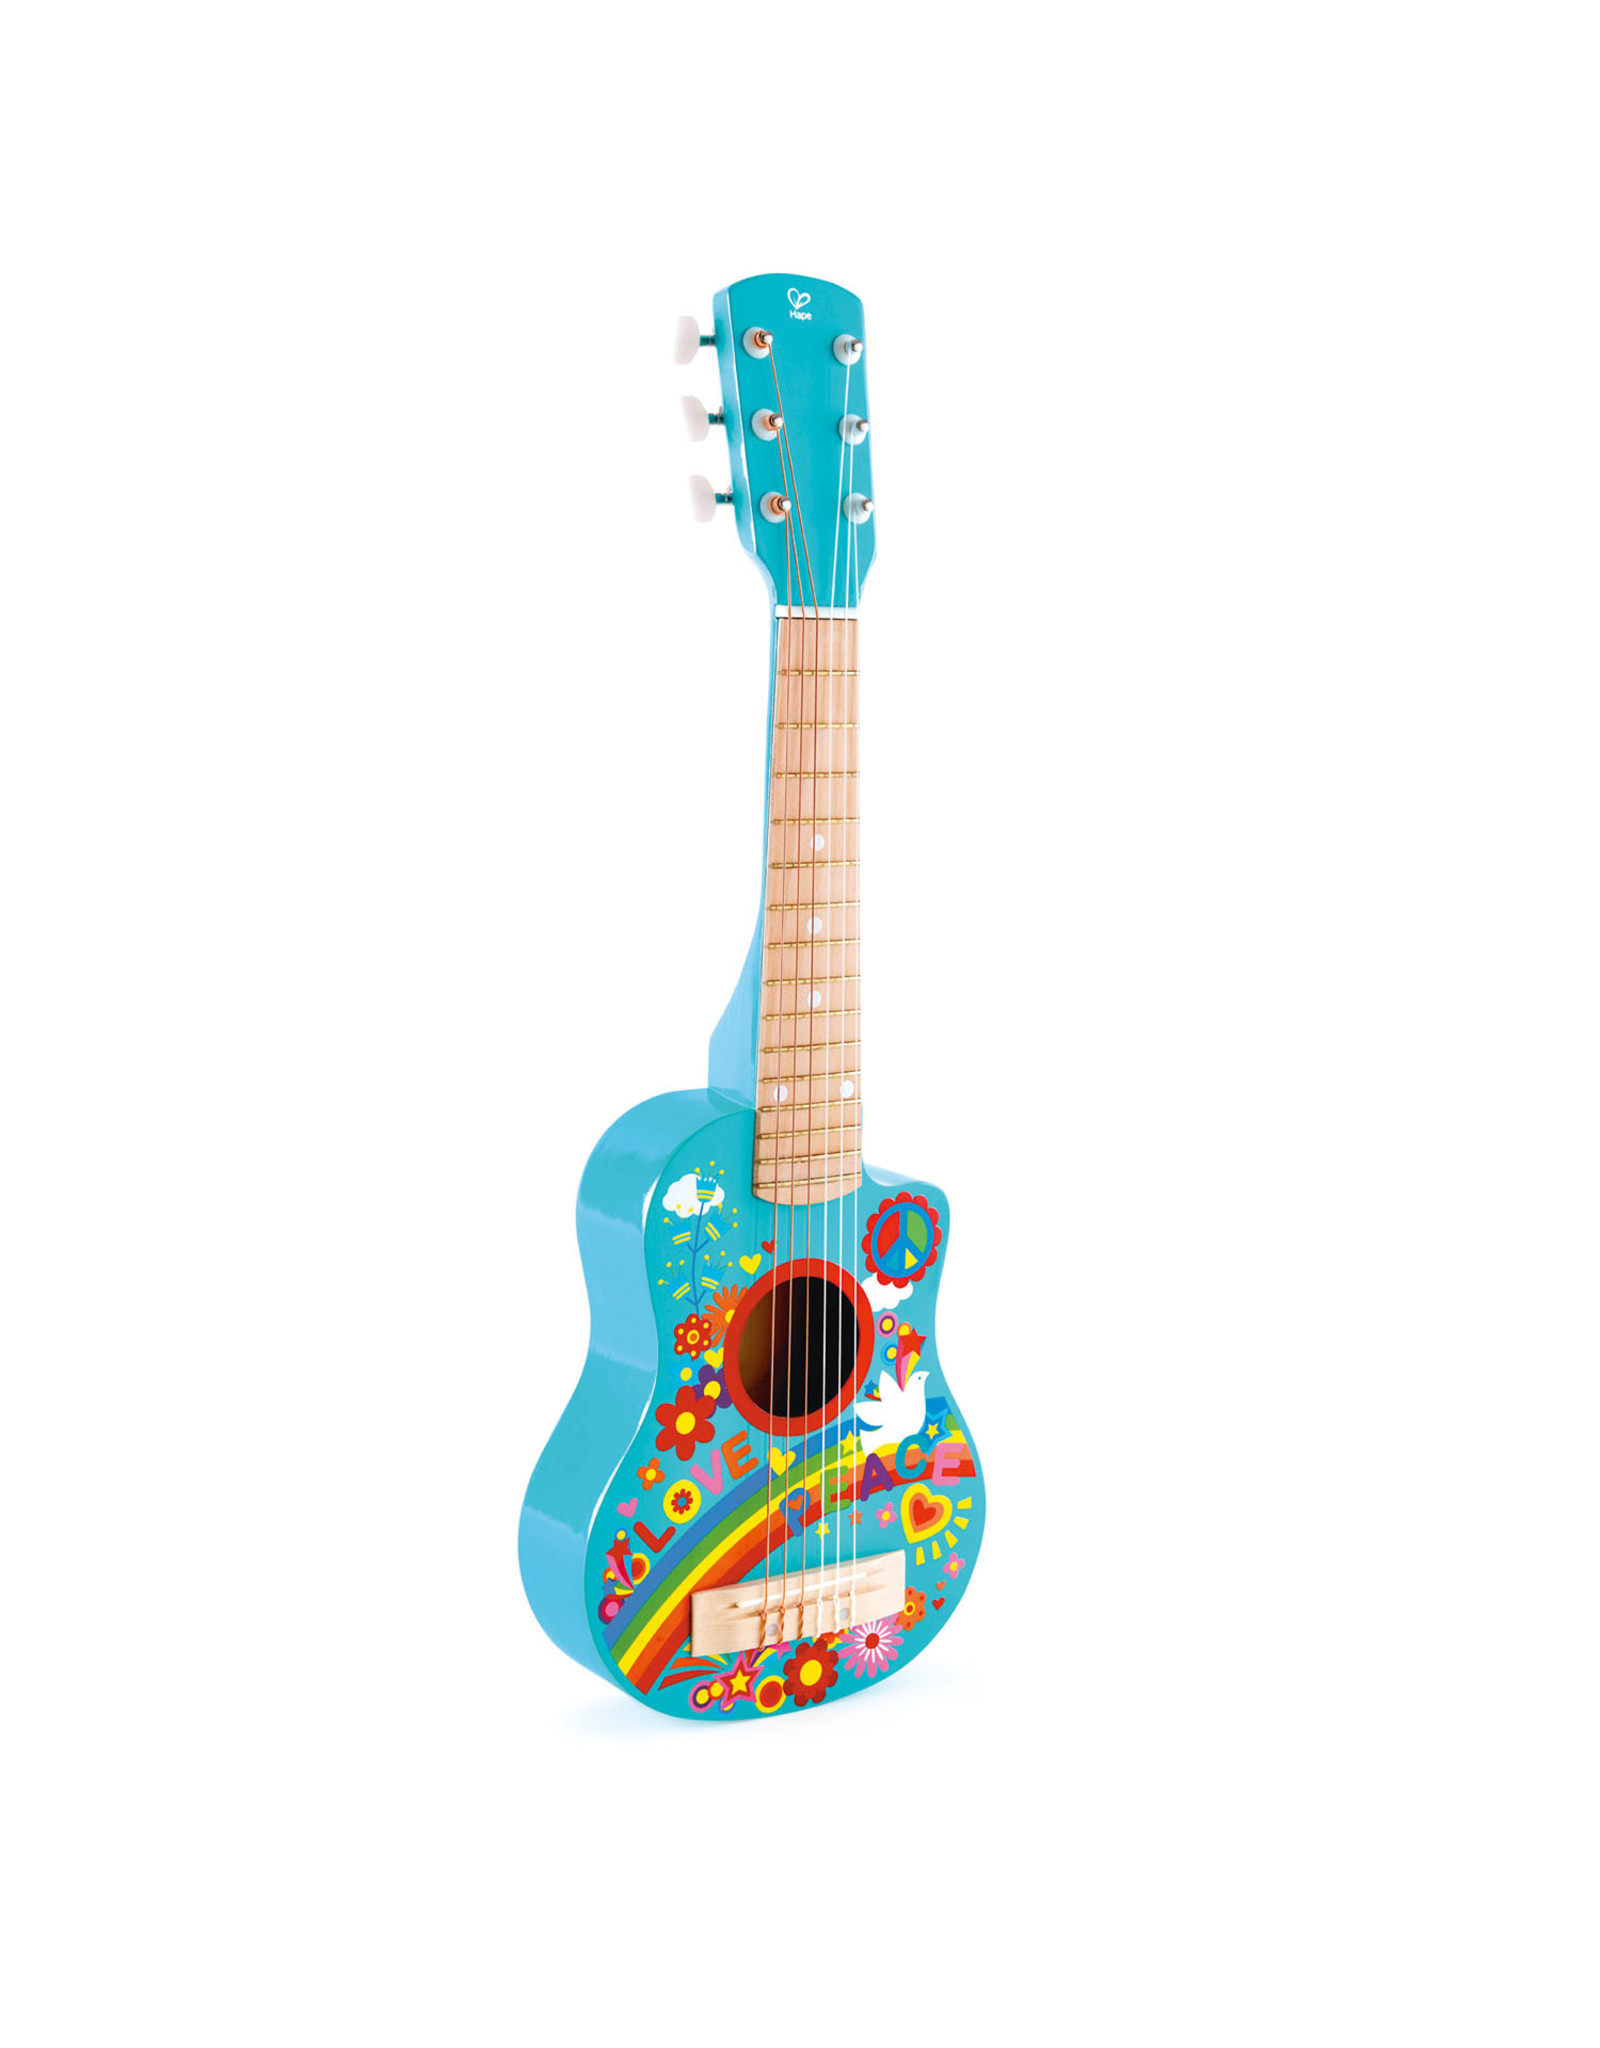 Hape Hape Flower Power Guitar